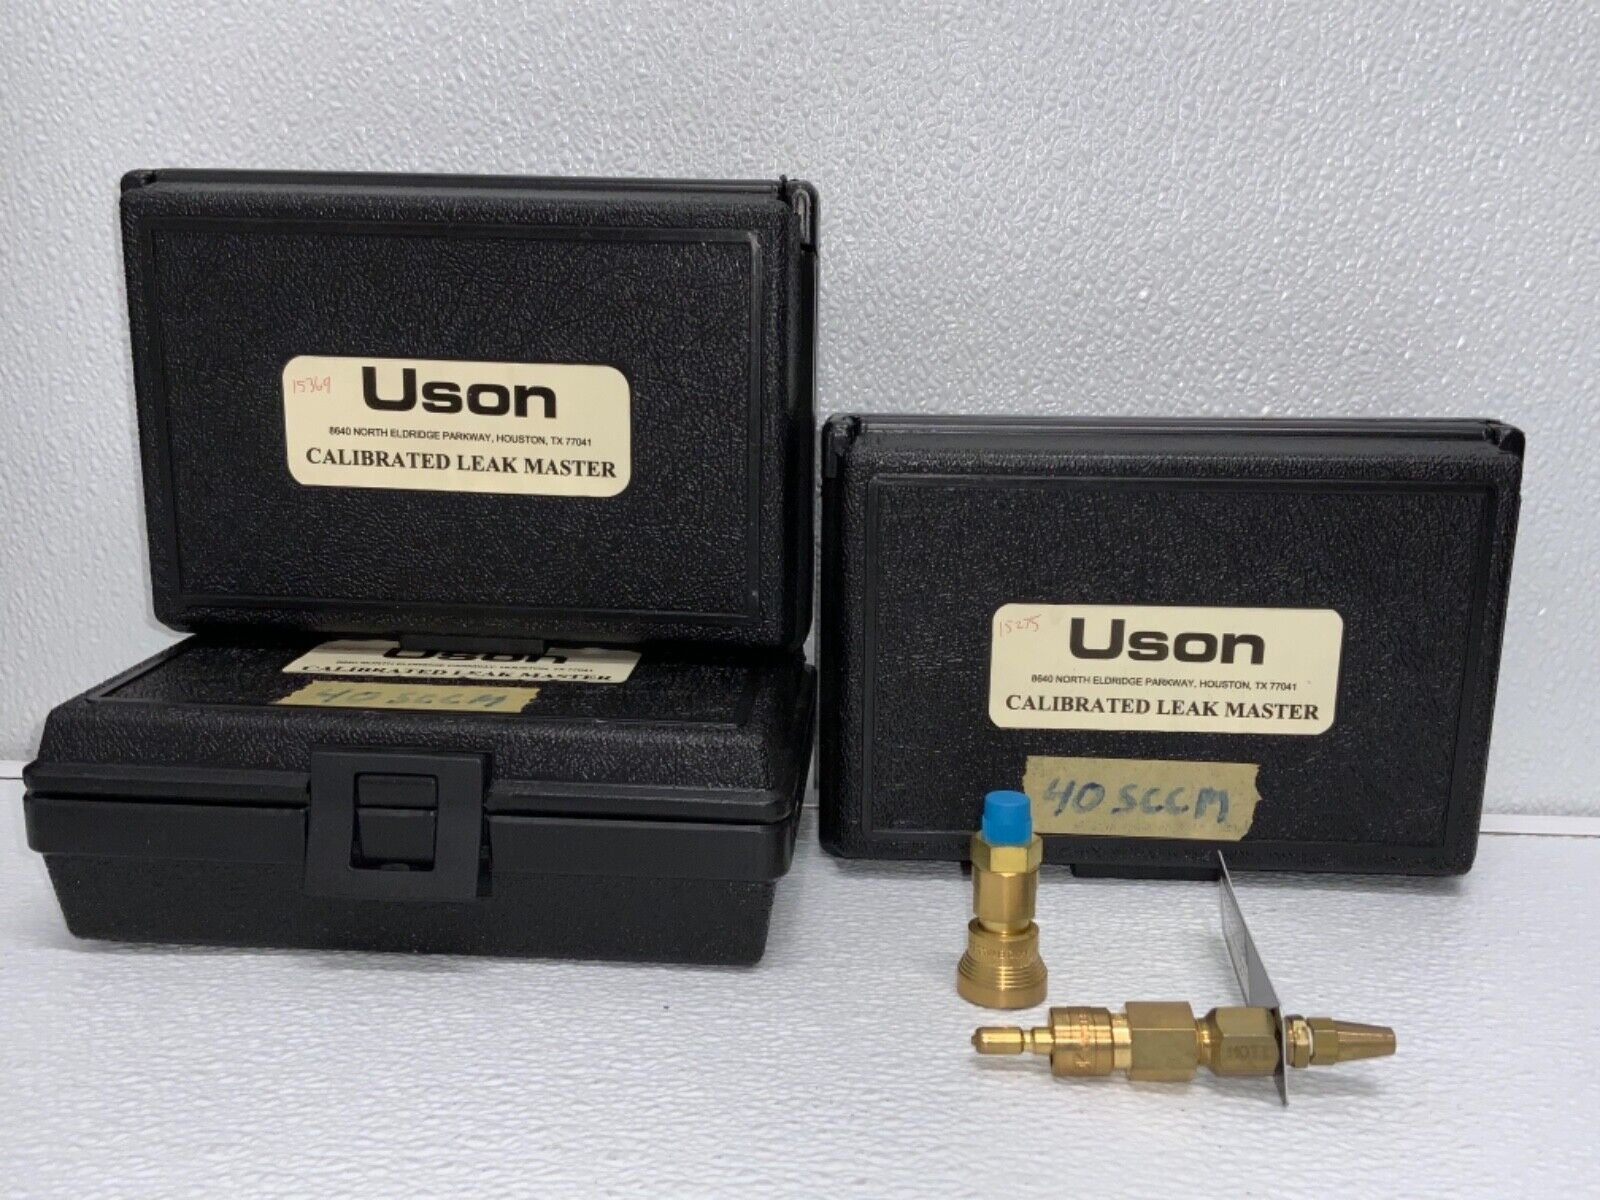 Uson Calibrated Master Leak Tester Detector 40 SCCM 35 KPA Lot of 3 52D